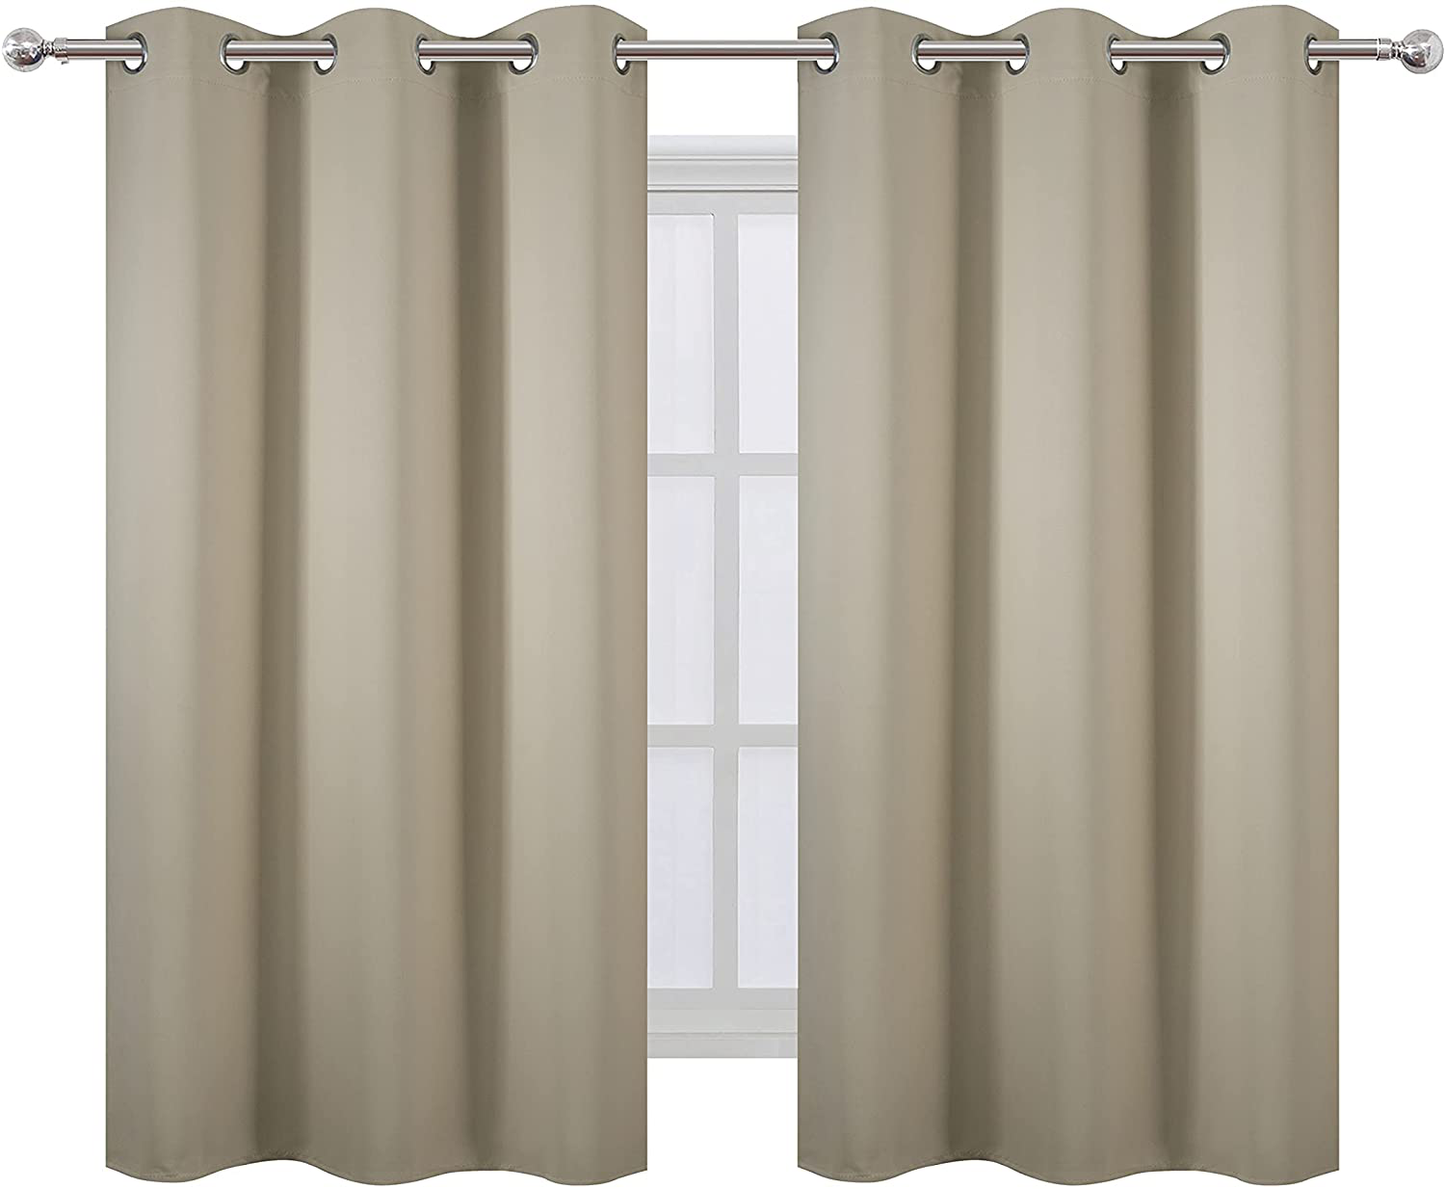 LEMOMO Light Beige Thermal Blackout Curtains/52 x 84 Inch/Set of 2 Panels Room Darkening Curtains